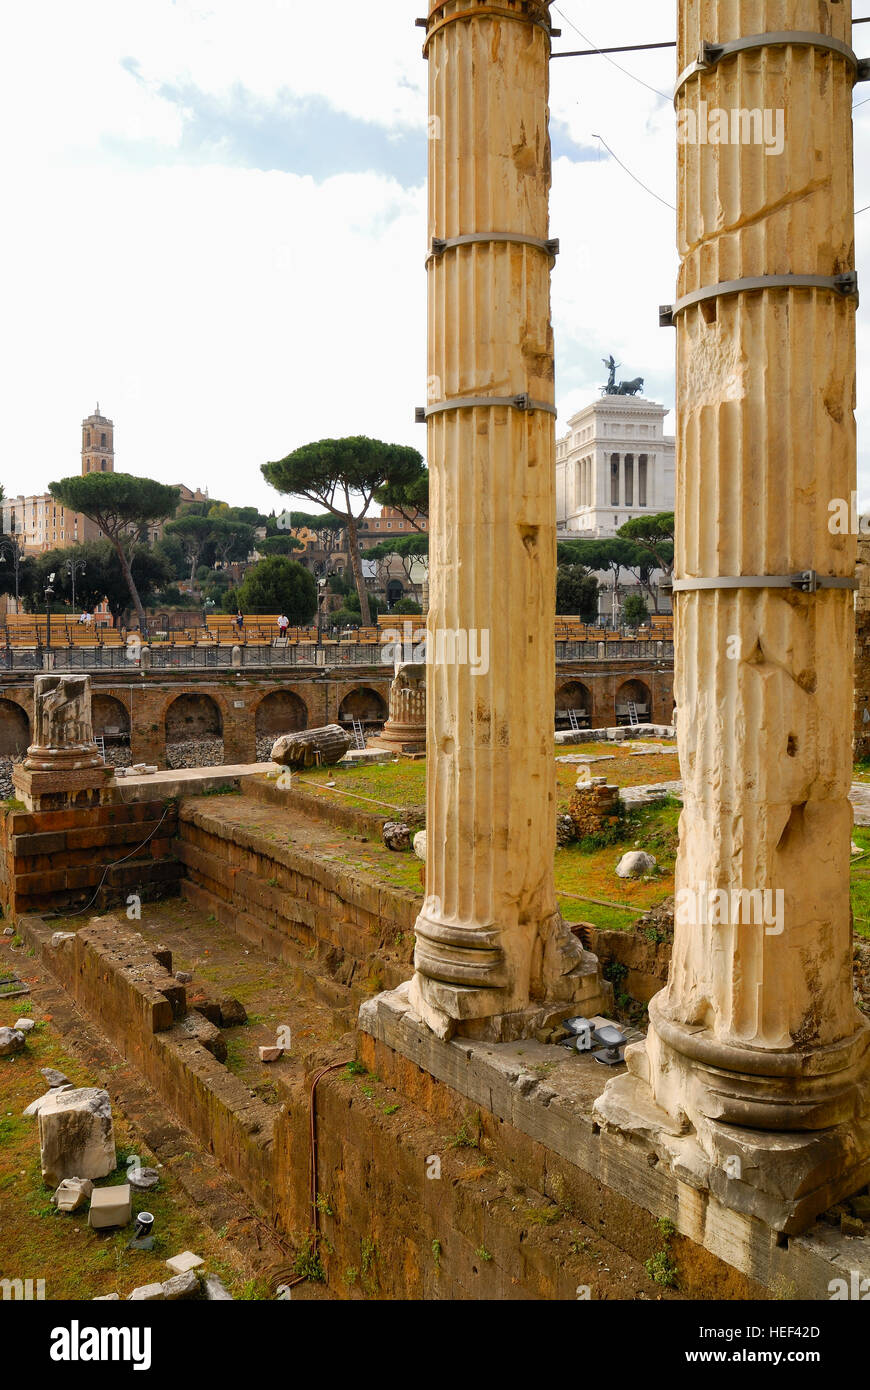 Roman Forum, Rome's historic center, Italy. Stock Photo